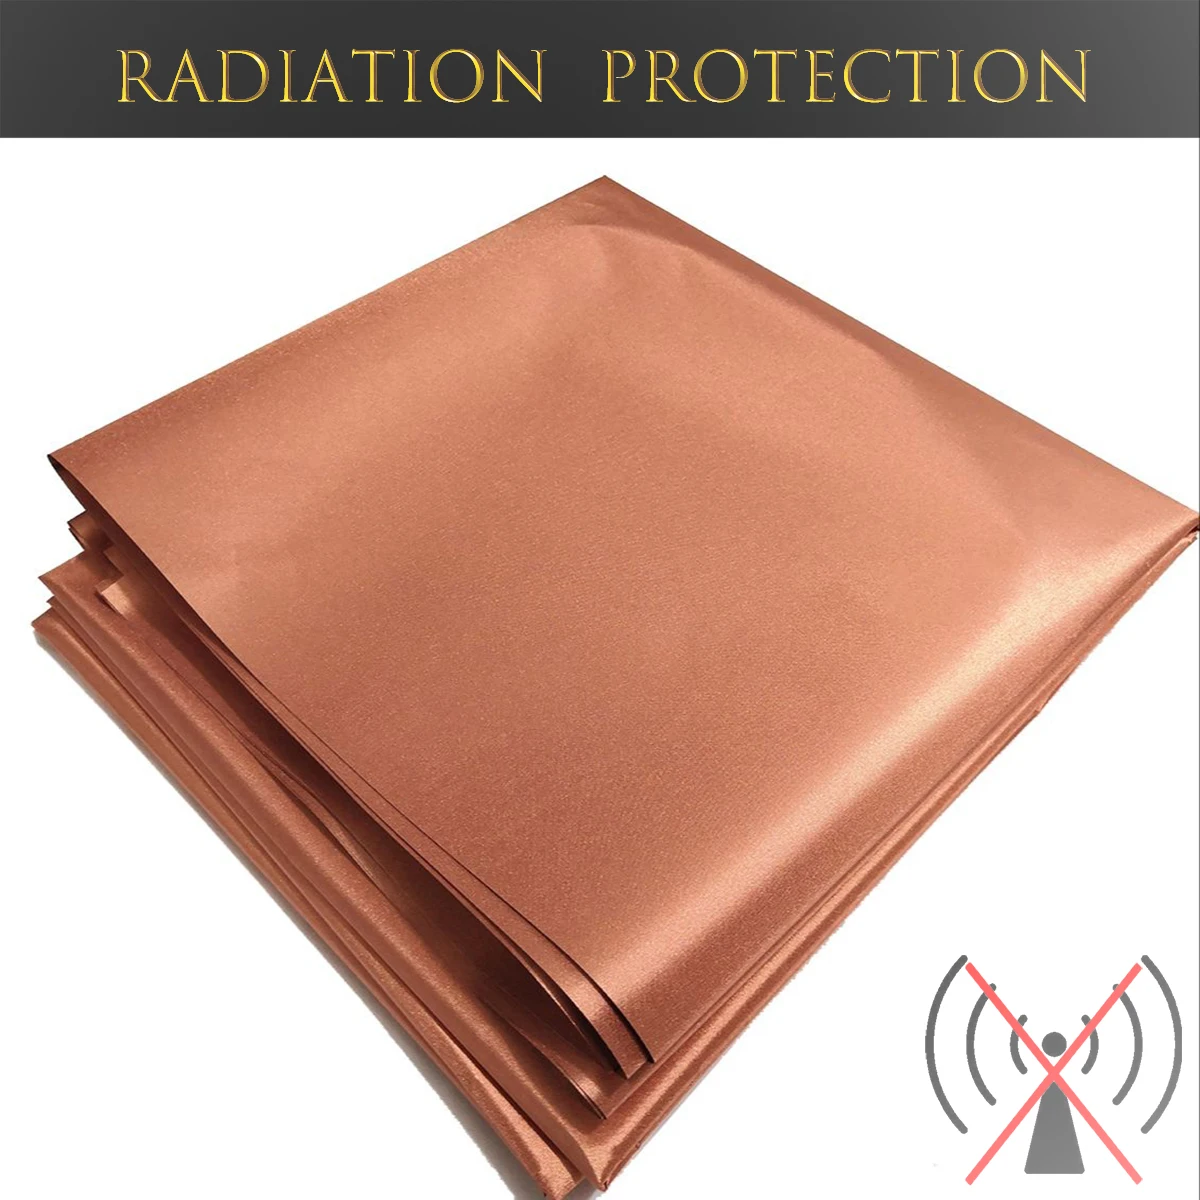 

Faraday Cloth Conductive Copper Fabric Reduce EMF/EMI Protection Material Blocking RFID/RF Shields Signals (WiFi, Phone)